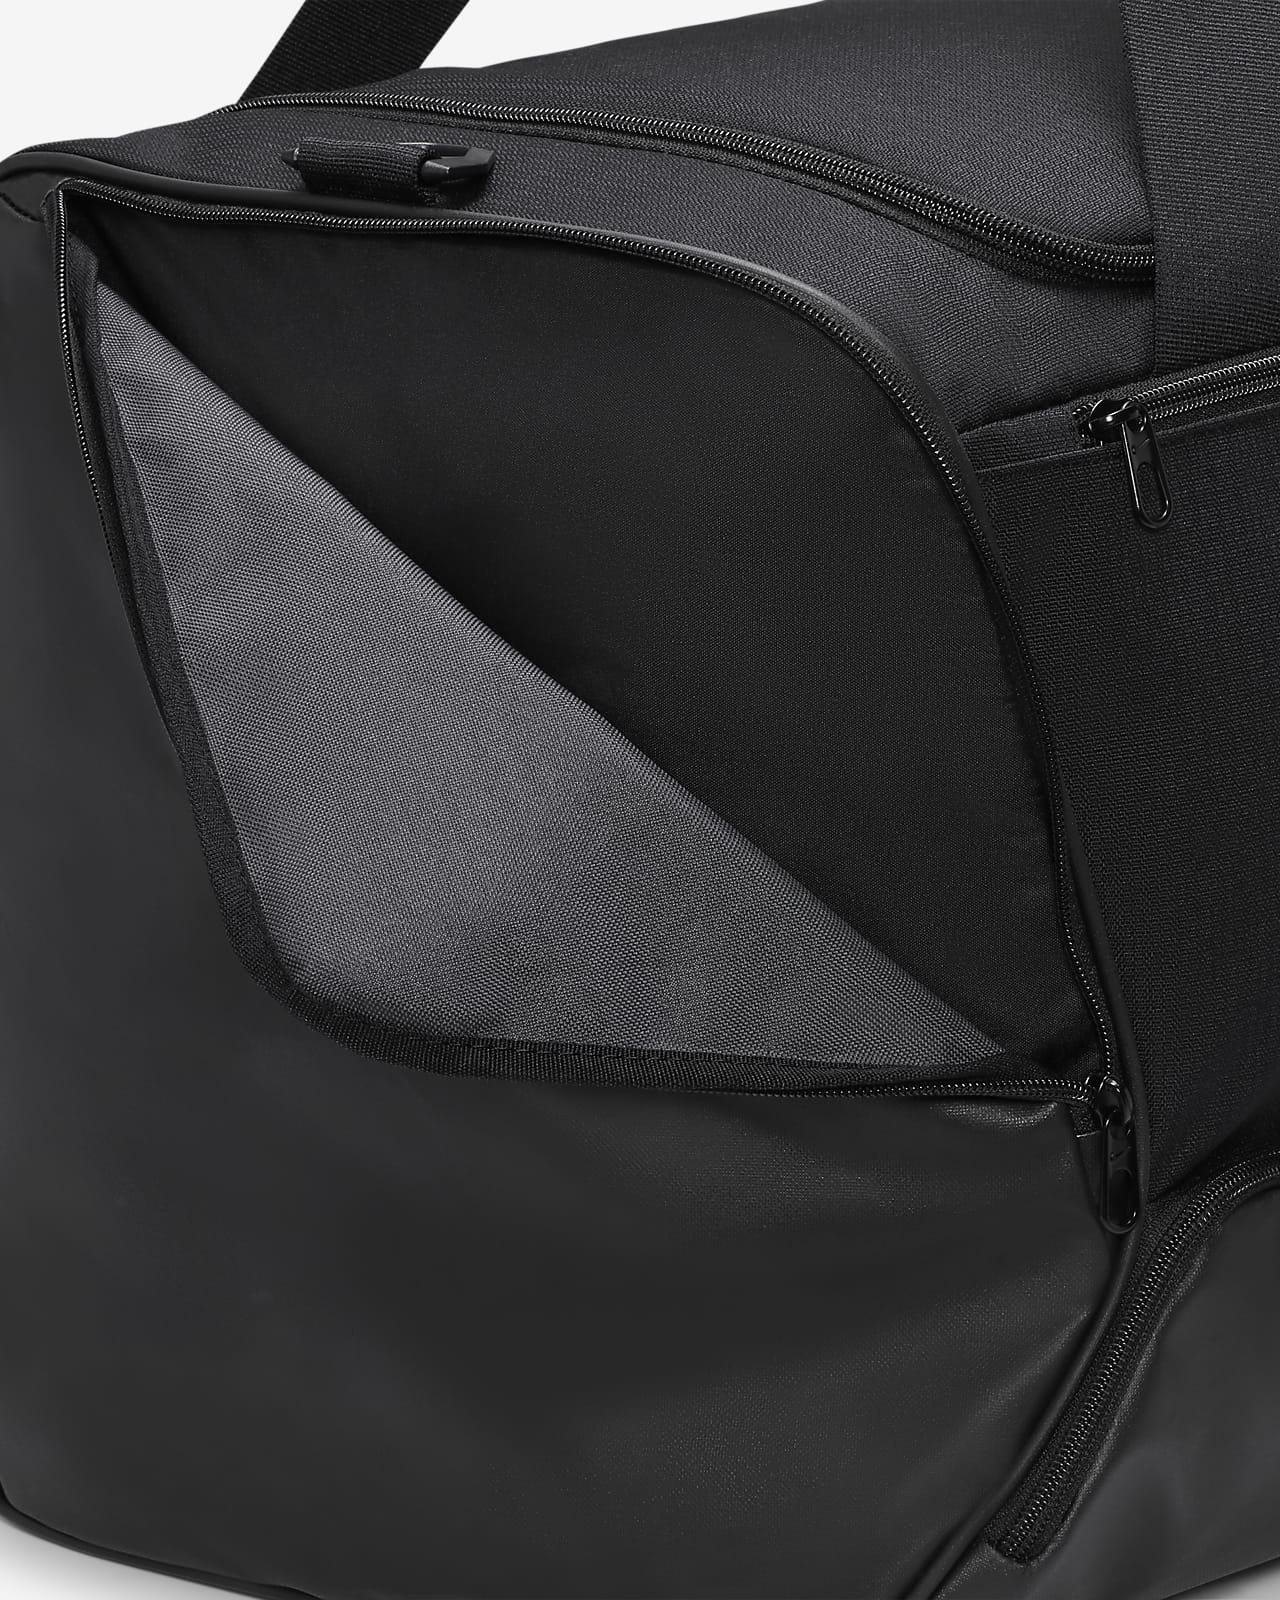 Finish Line Accessories Bags Travel Bags in Black/Black Polyester 95L Brasilia 9.5 Training Duffel Bag 